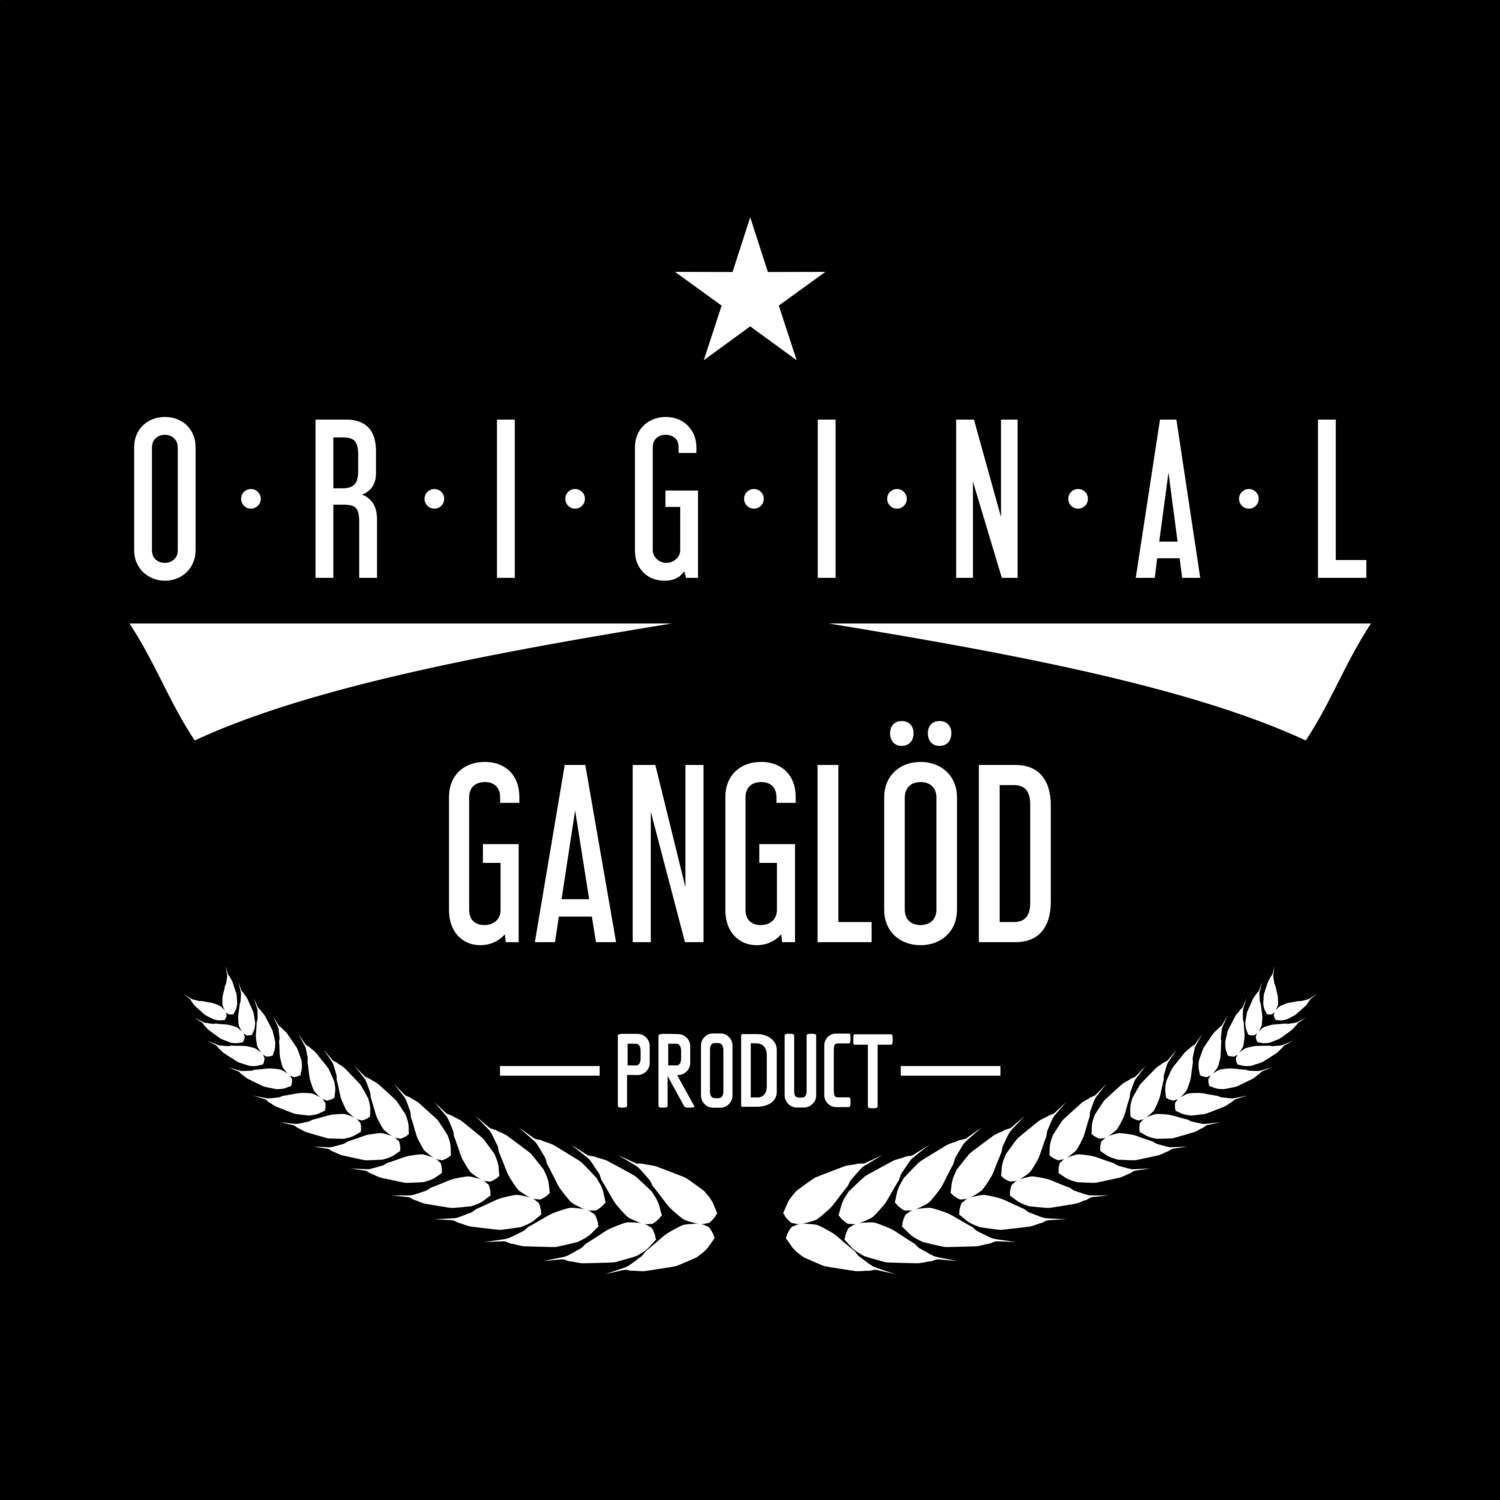 Ganglöd T-Shirt »Original Product«